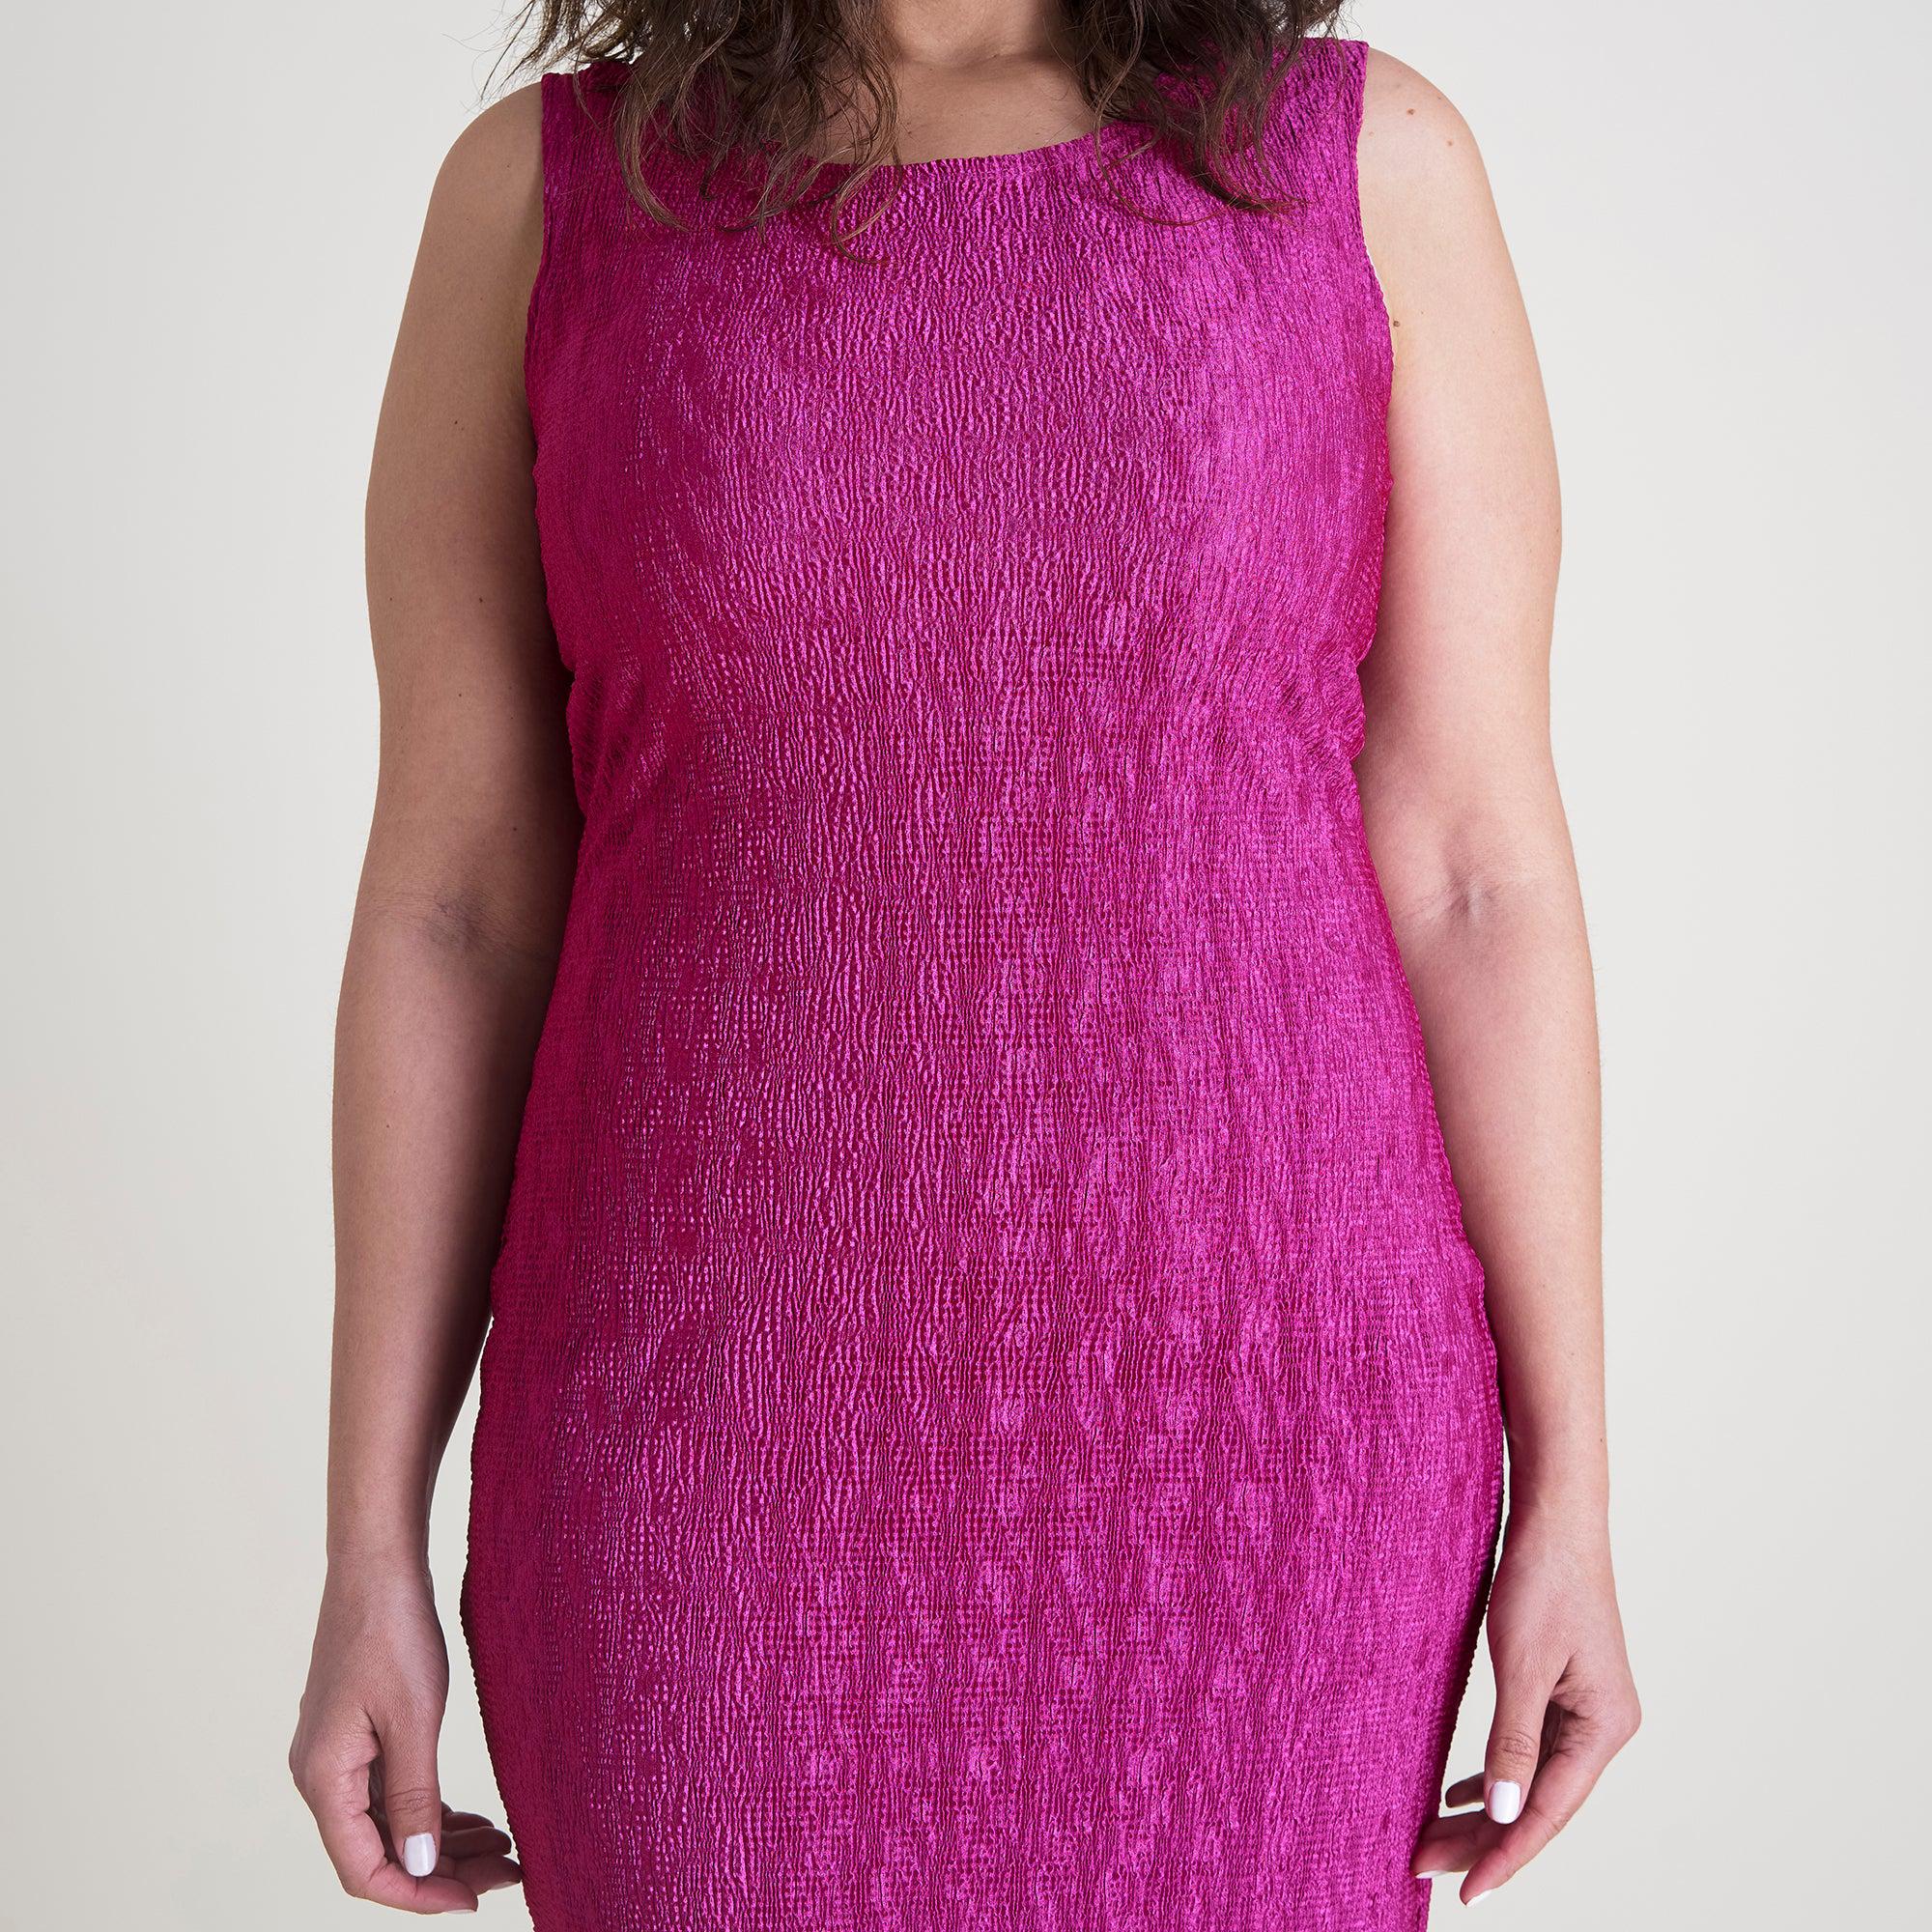 Woman posing wearing Berry/Raspberry Terra Raspberry Sheath Dress from Connected Apparel